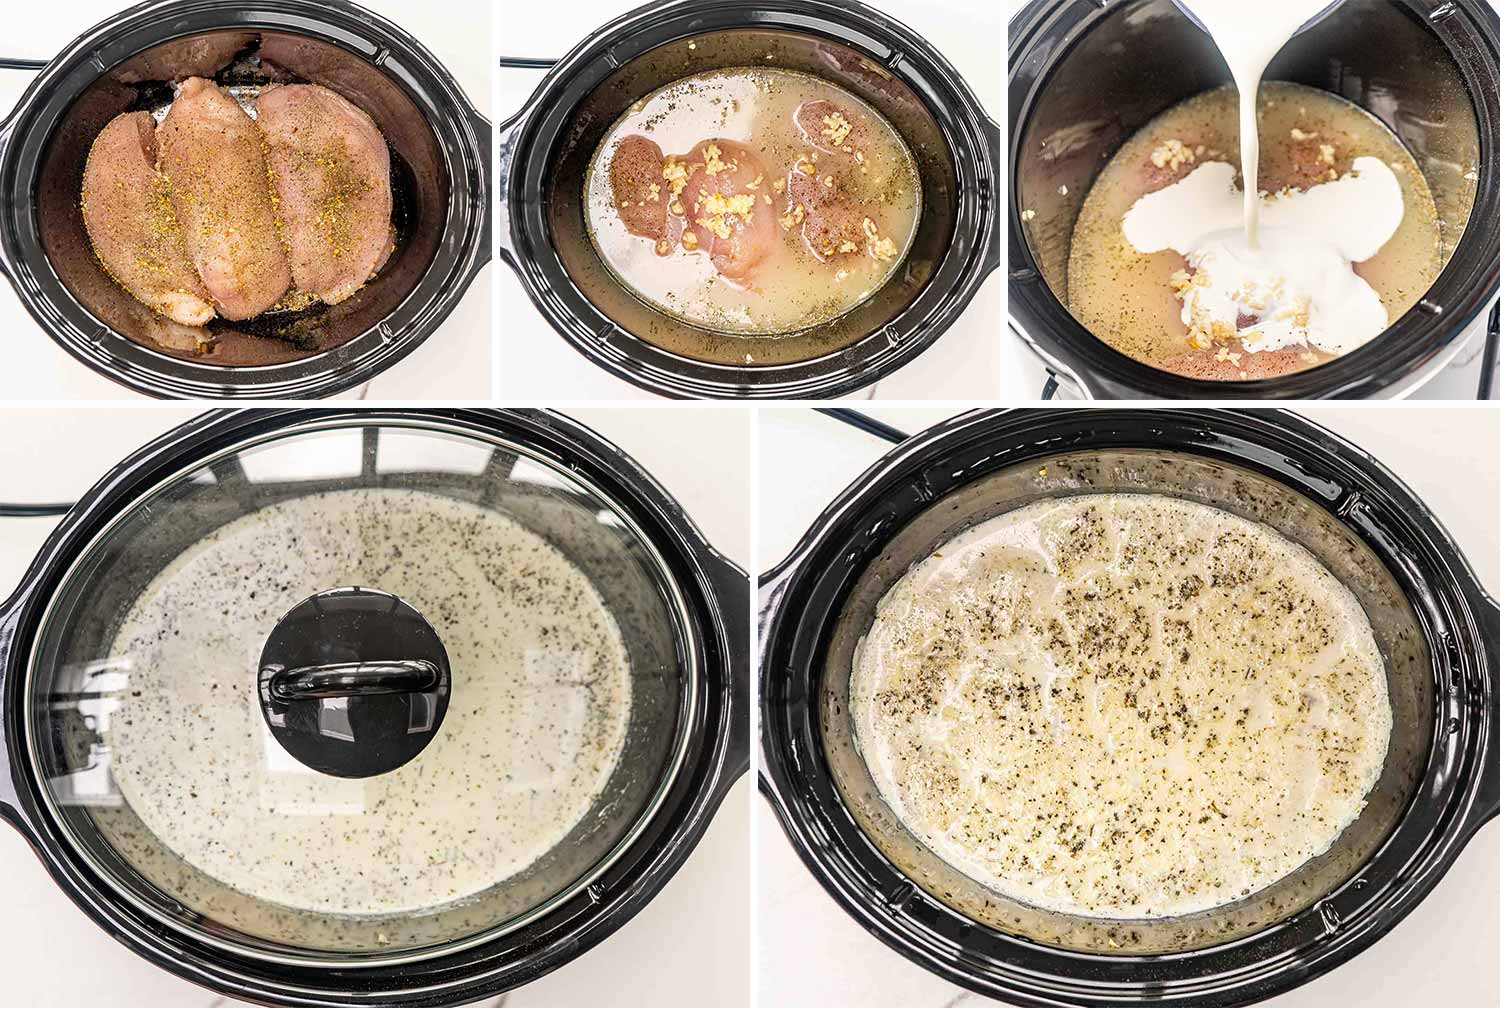 process shots showing how to make crockpot chicken alfredo.